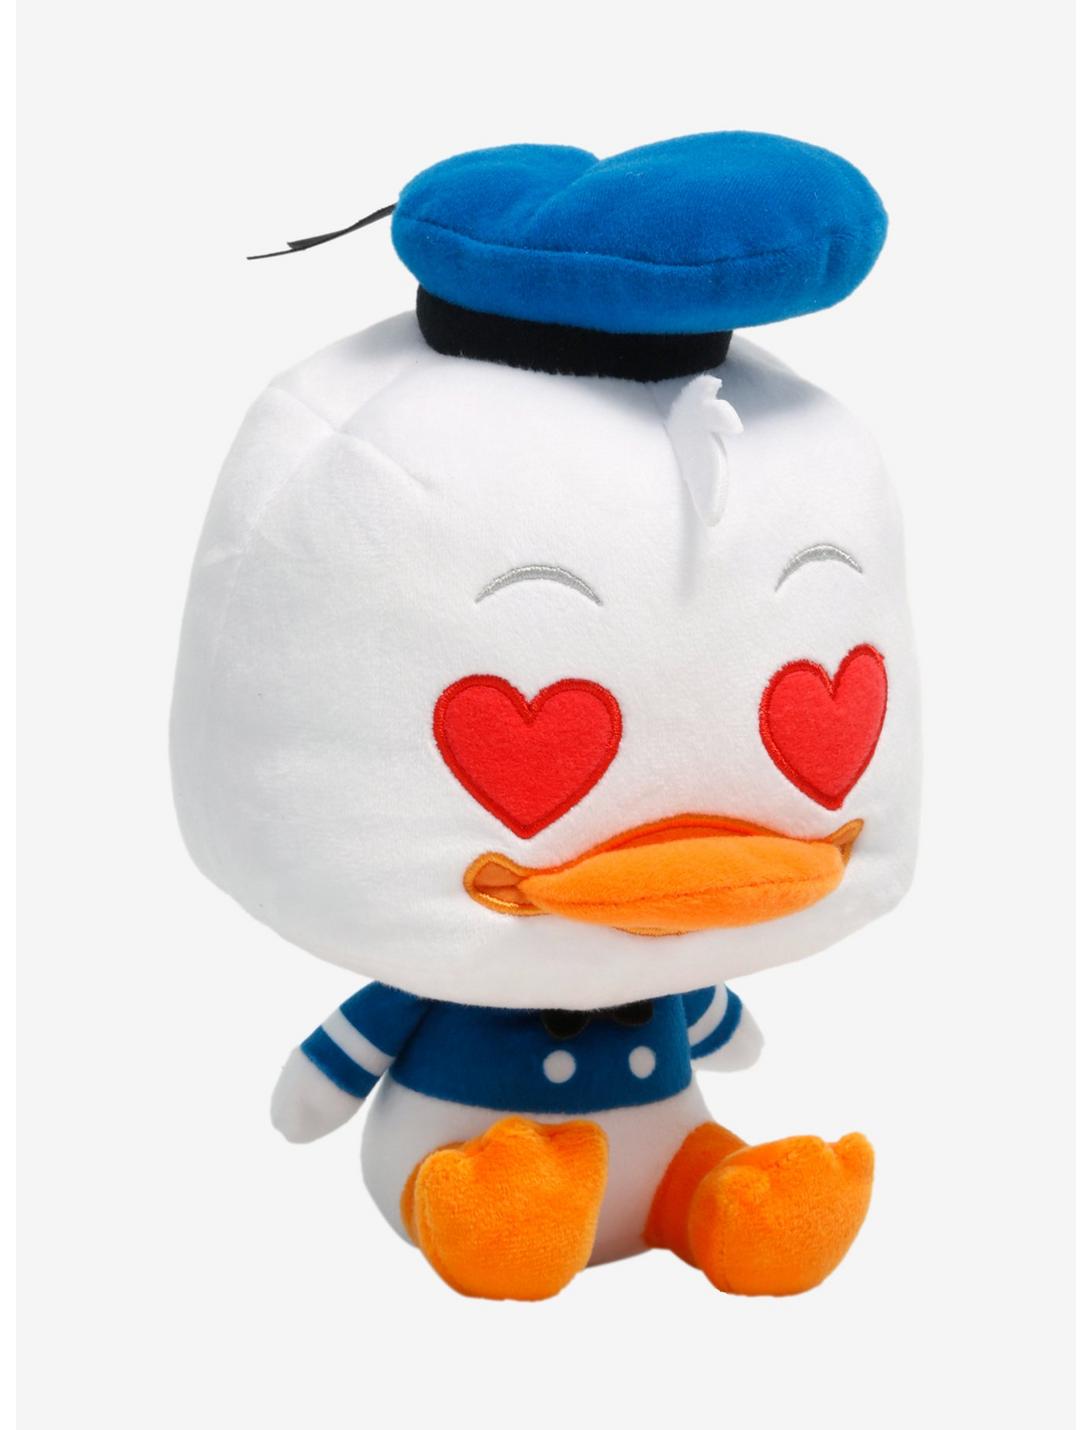 Funko Disney Heart Eyes Donald Duck Plush, , hi-res